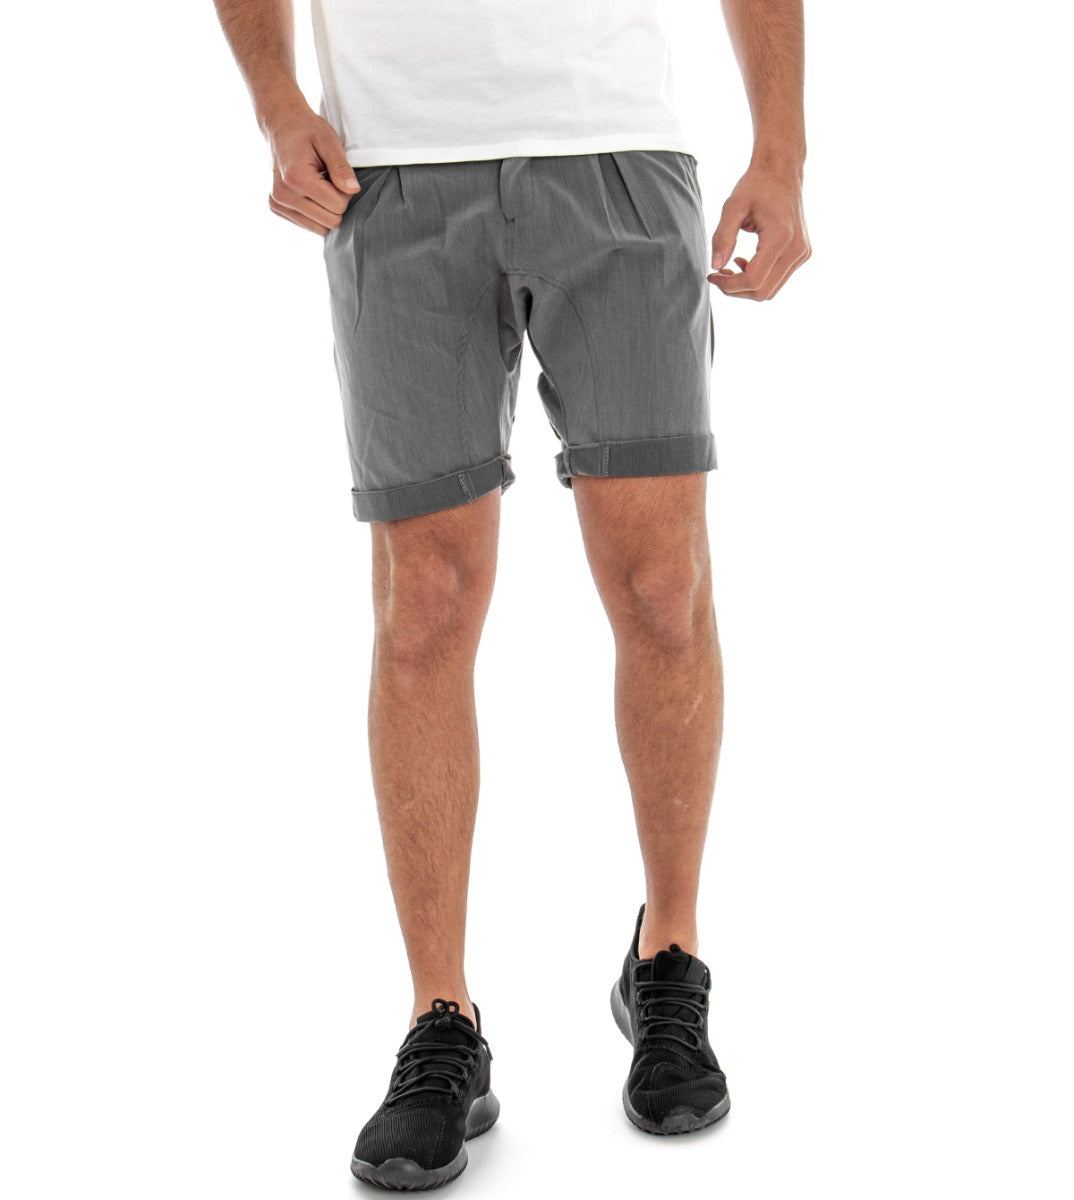 Bermuda Short Men's Shorts America Pocket Gray Pence Low Crotch GIOSAL-PC1298A